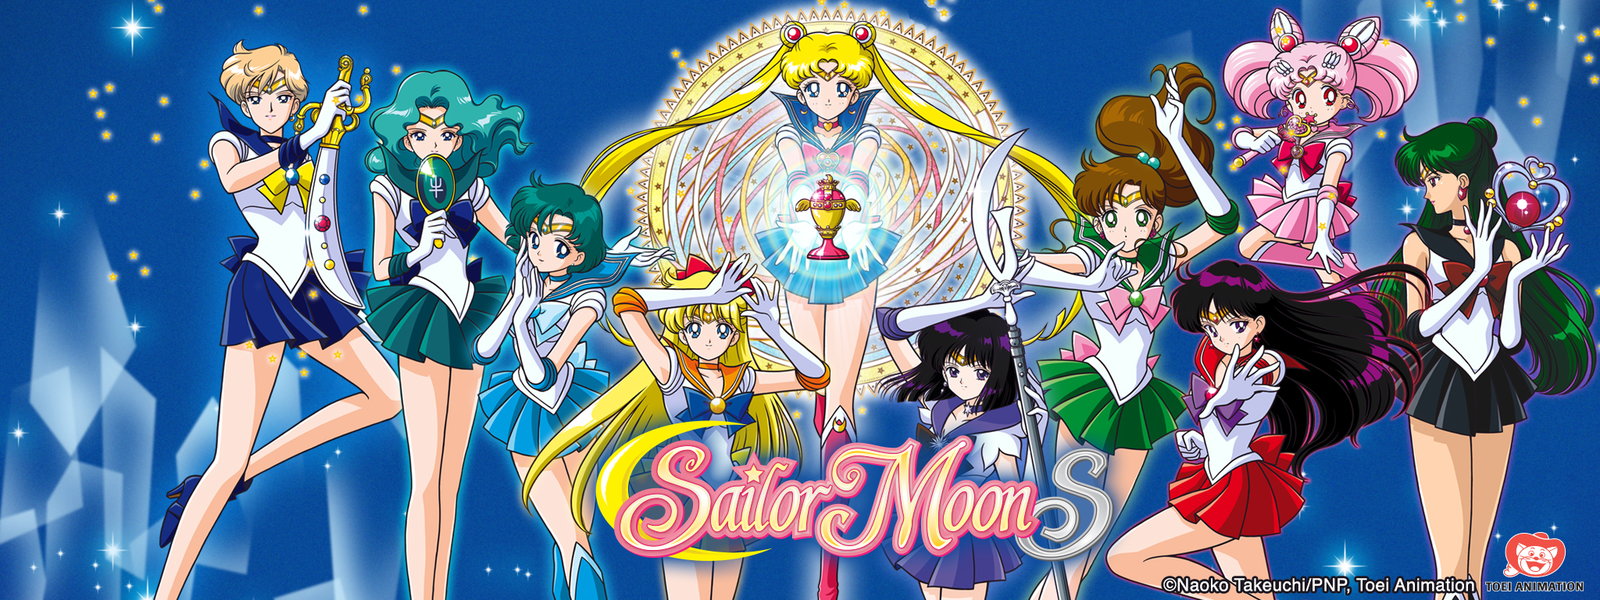 Sailor Moon S banner. 